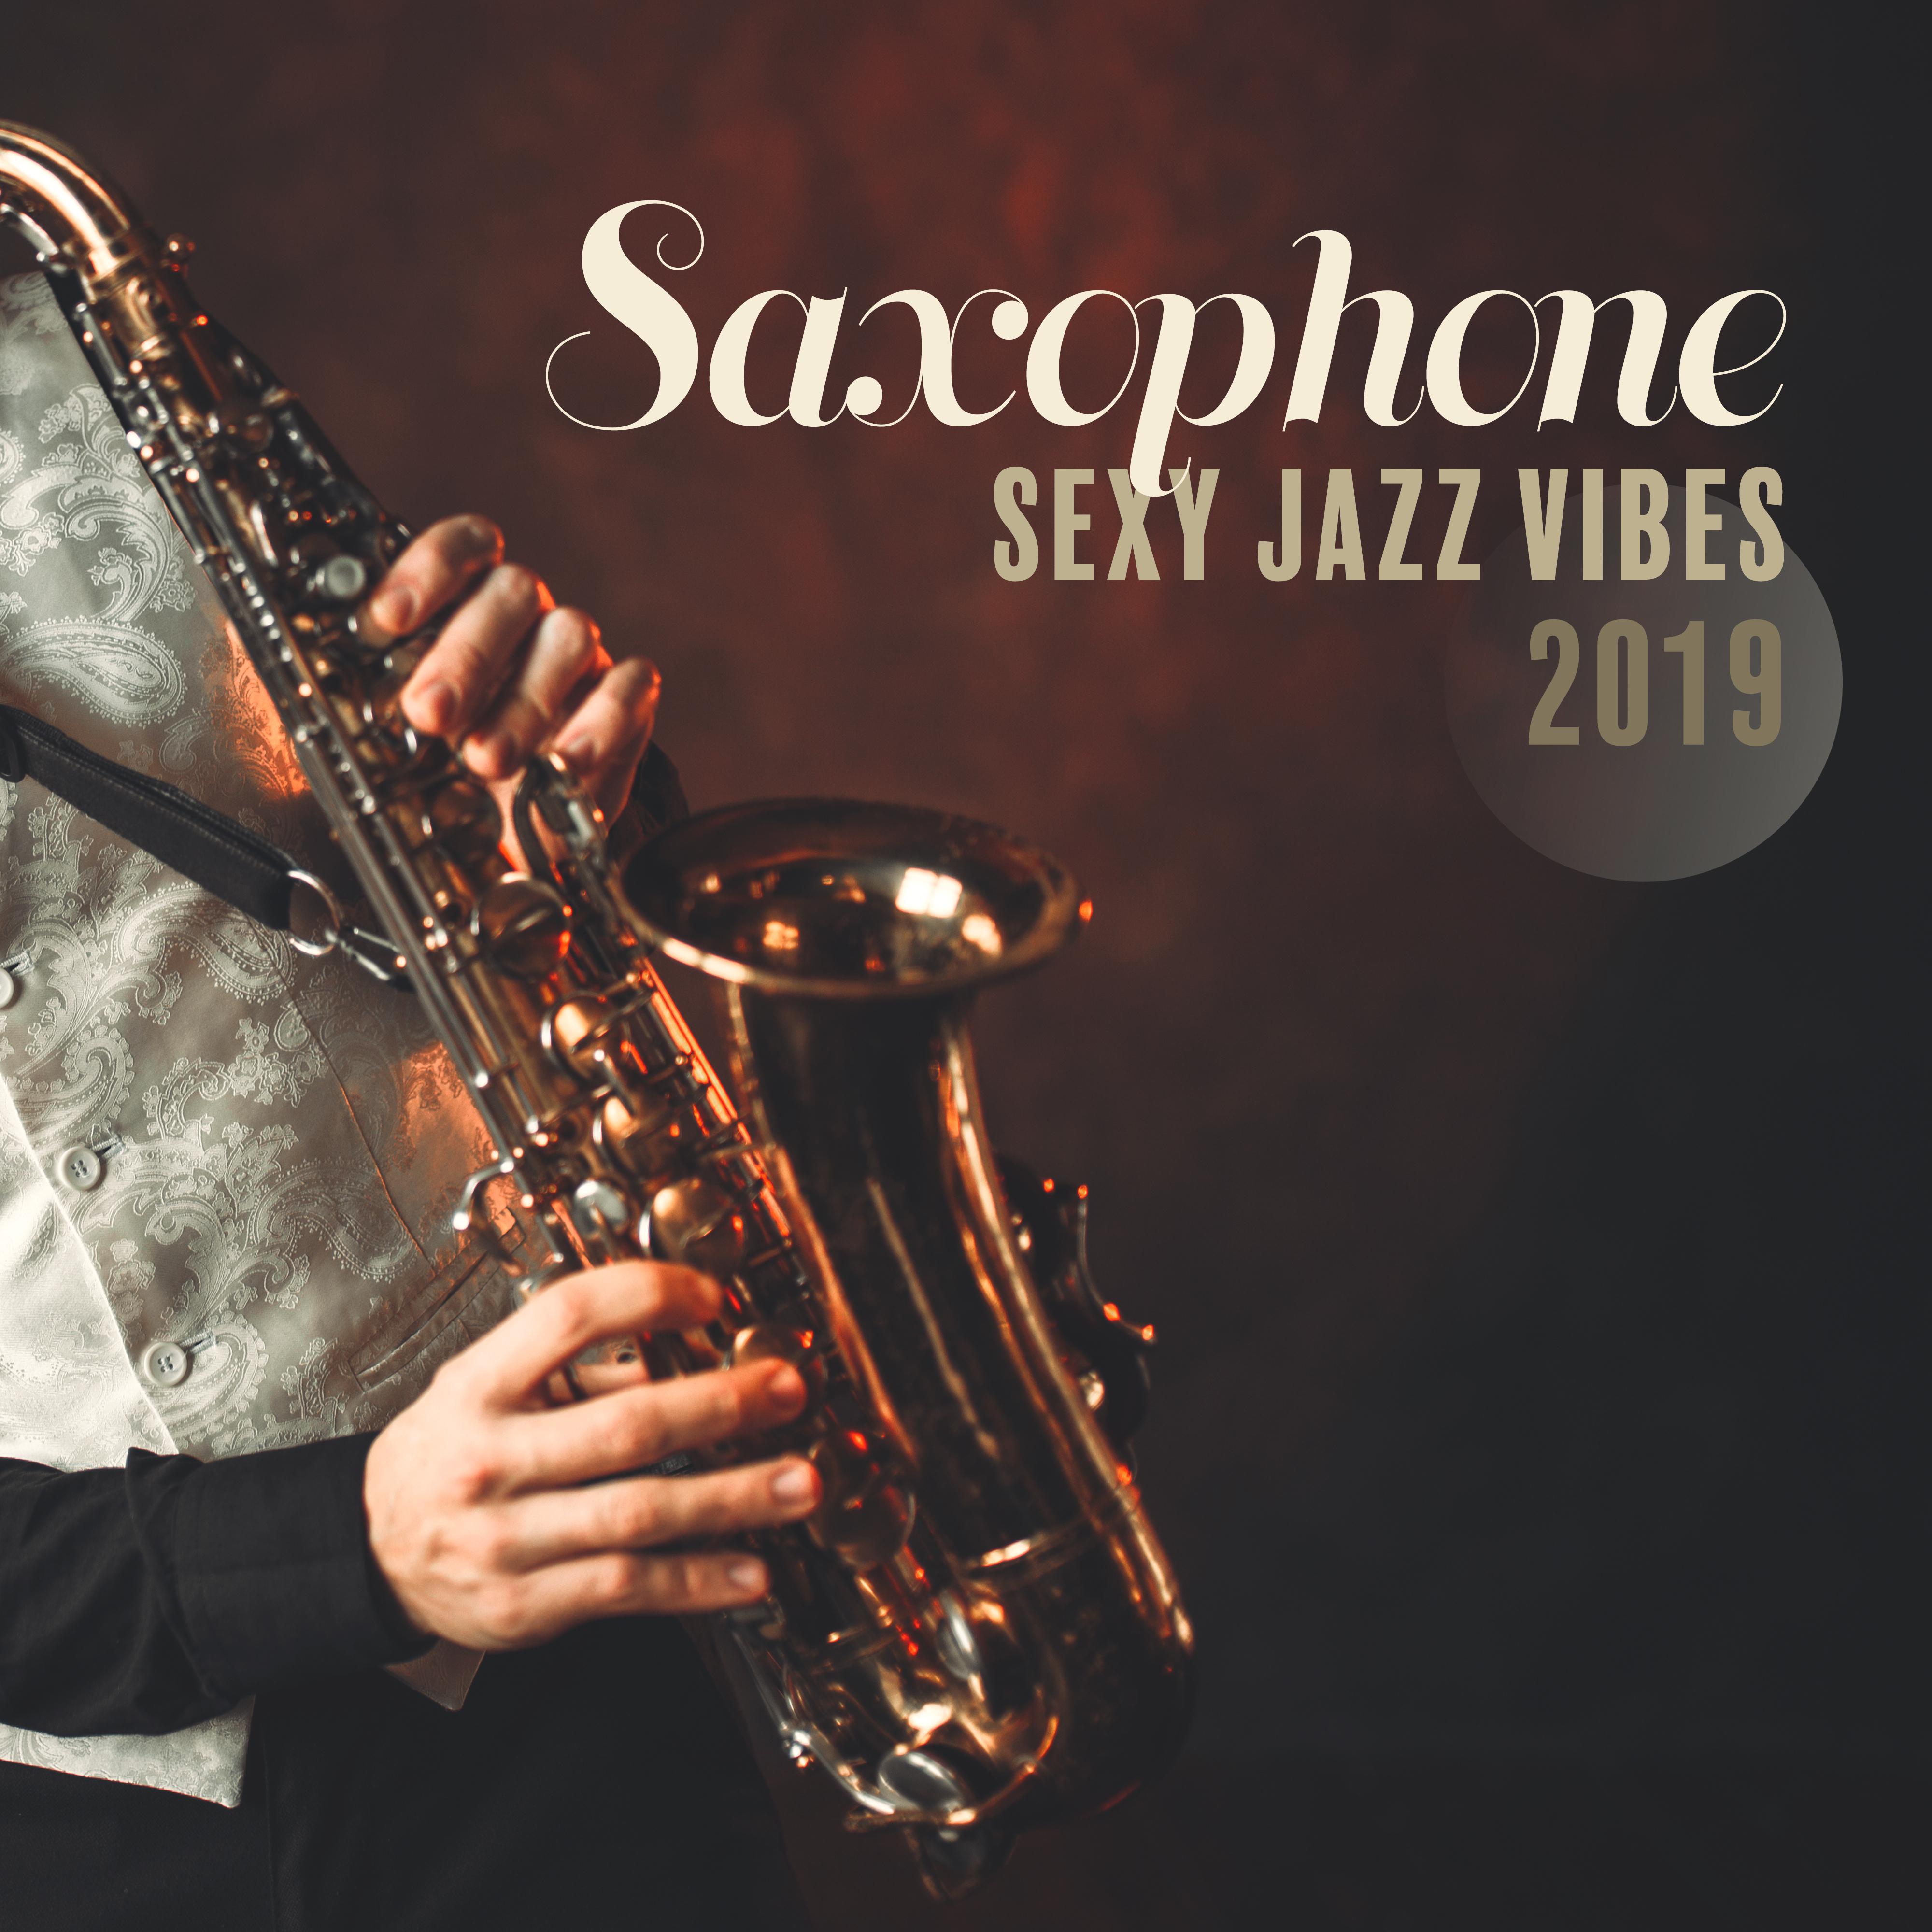 Saxophone **** Jazz Vibes 2019